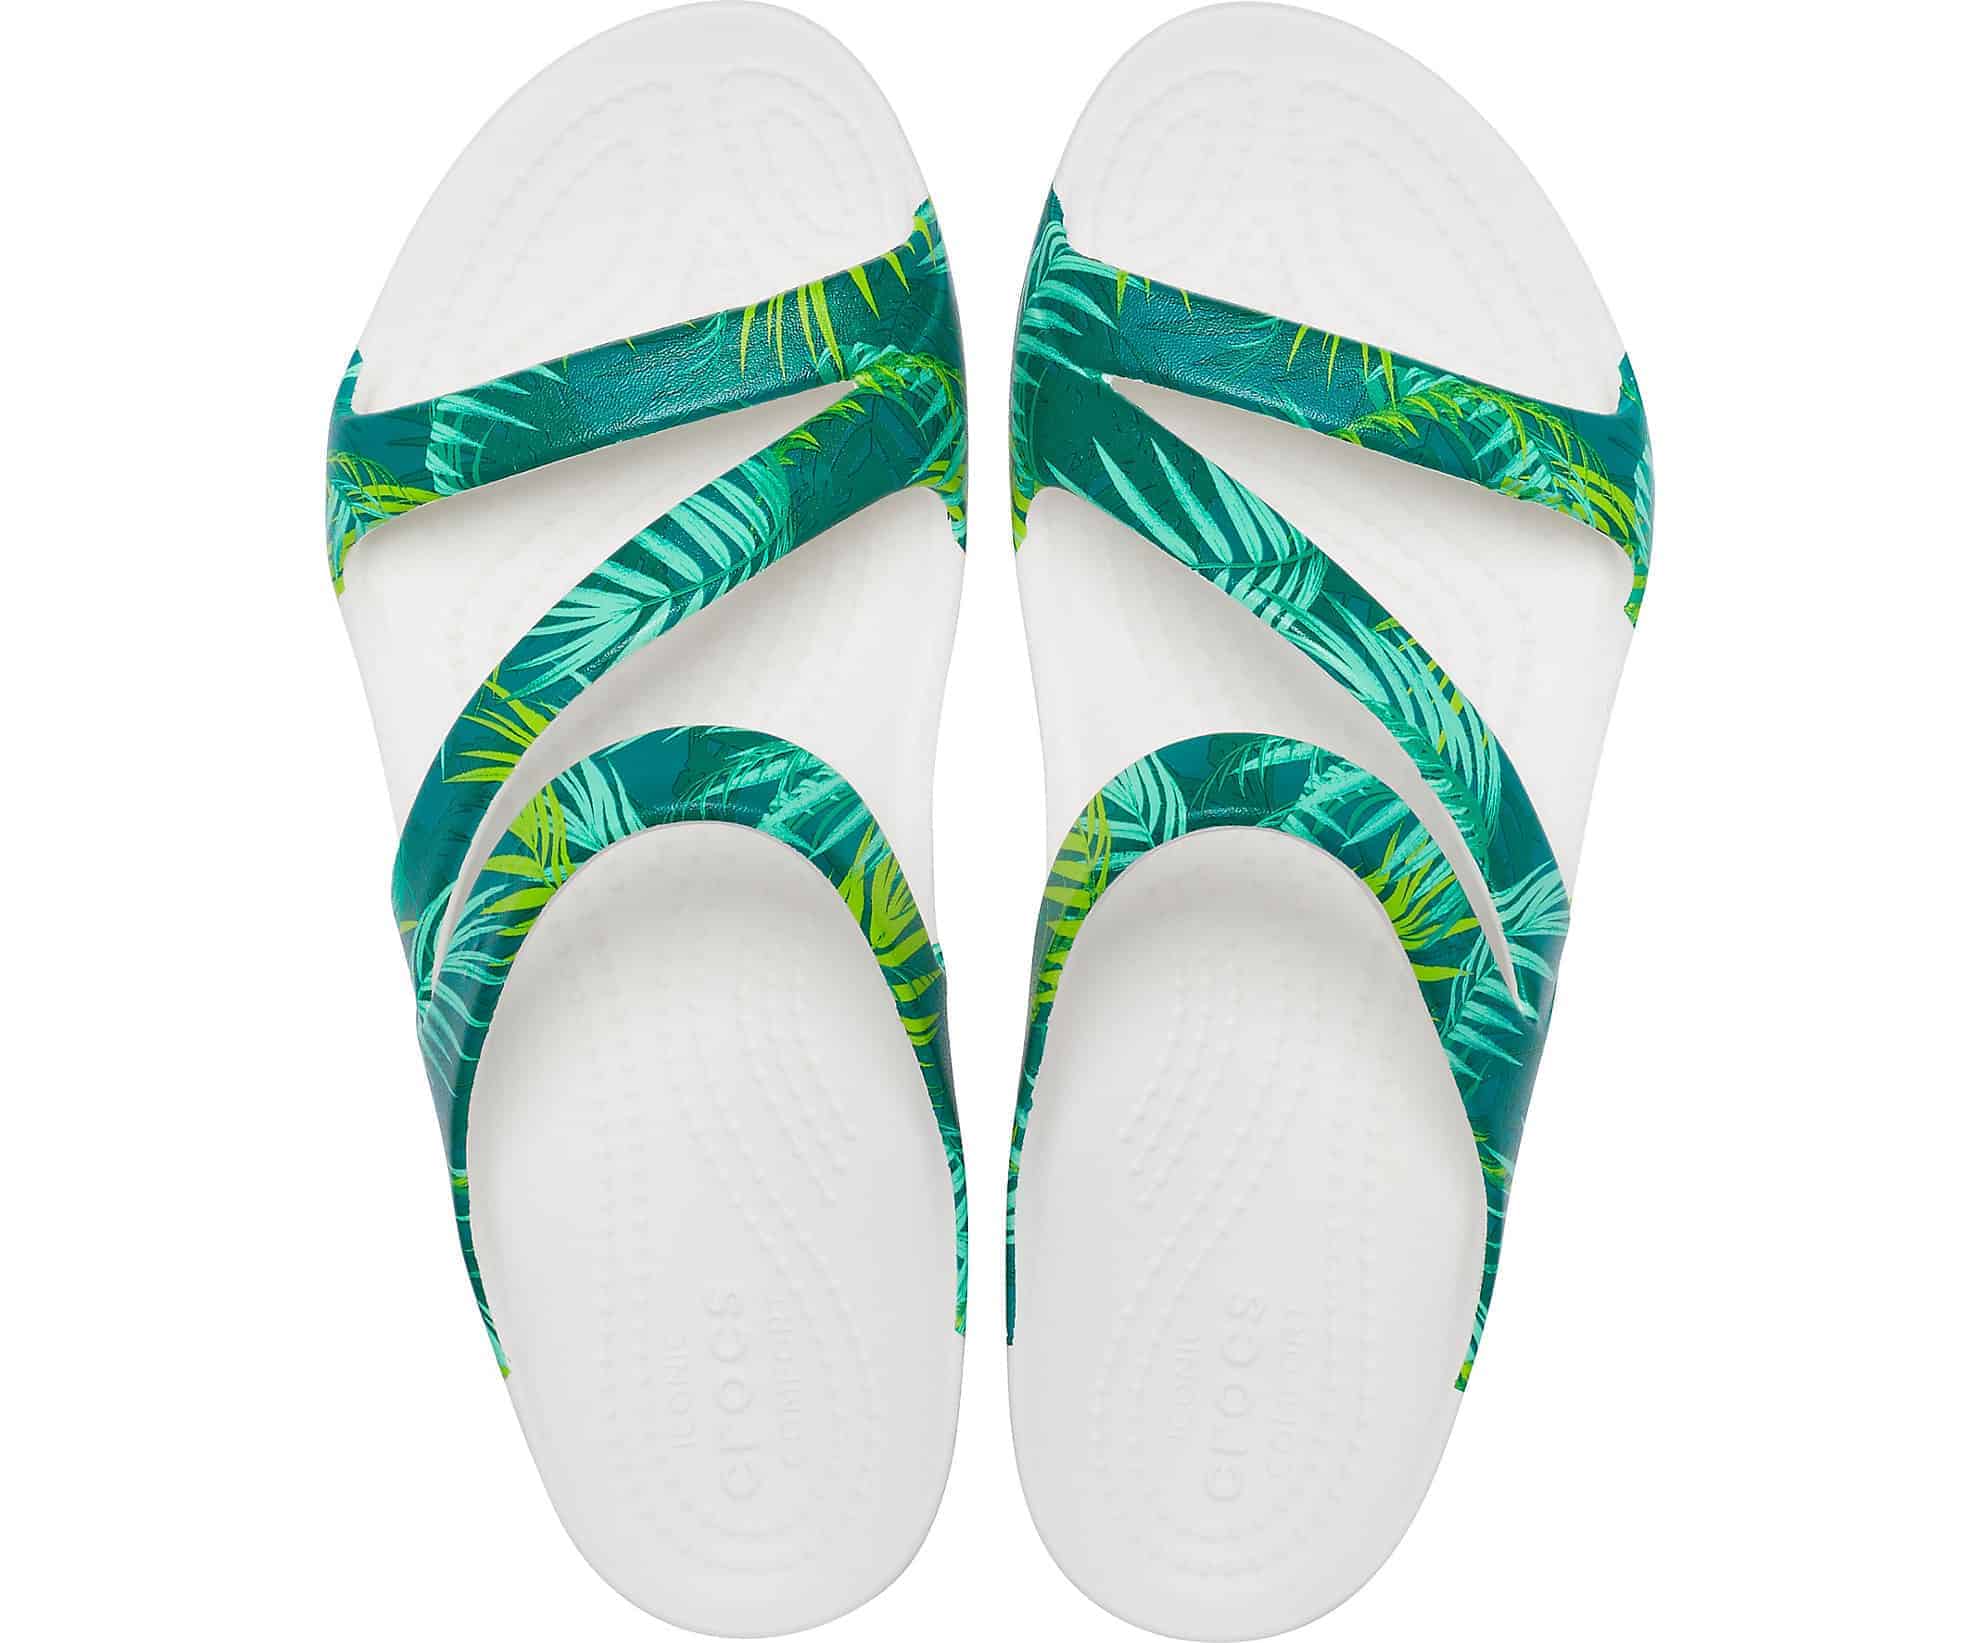 Crocs Kadee II Tropical Sandal Women - Zarrosa Shop